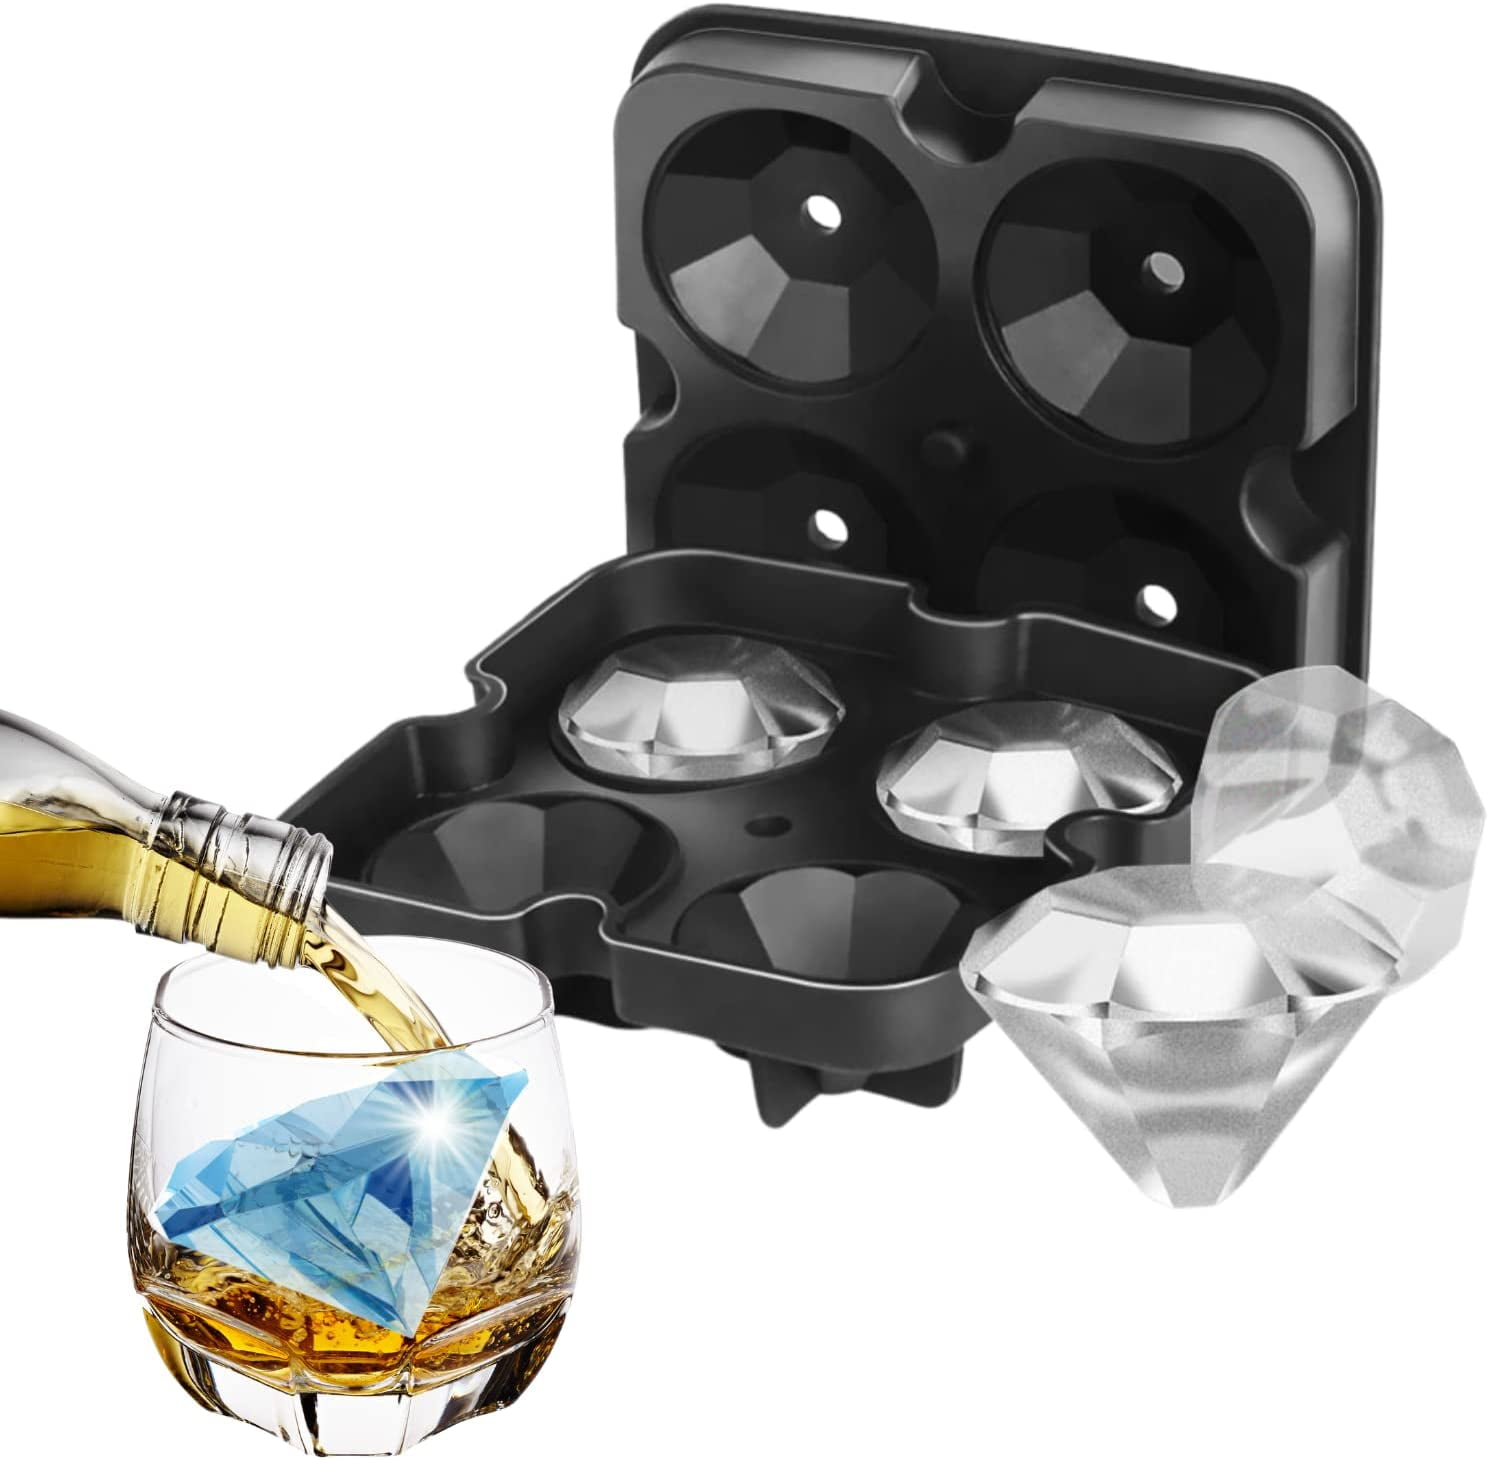 Diamond Ice Cube Mold Trays SAWNZC - BPA Flexi Silicone